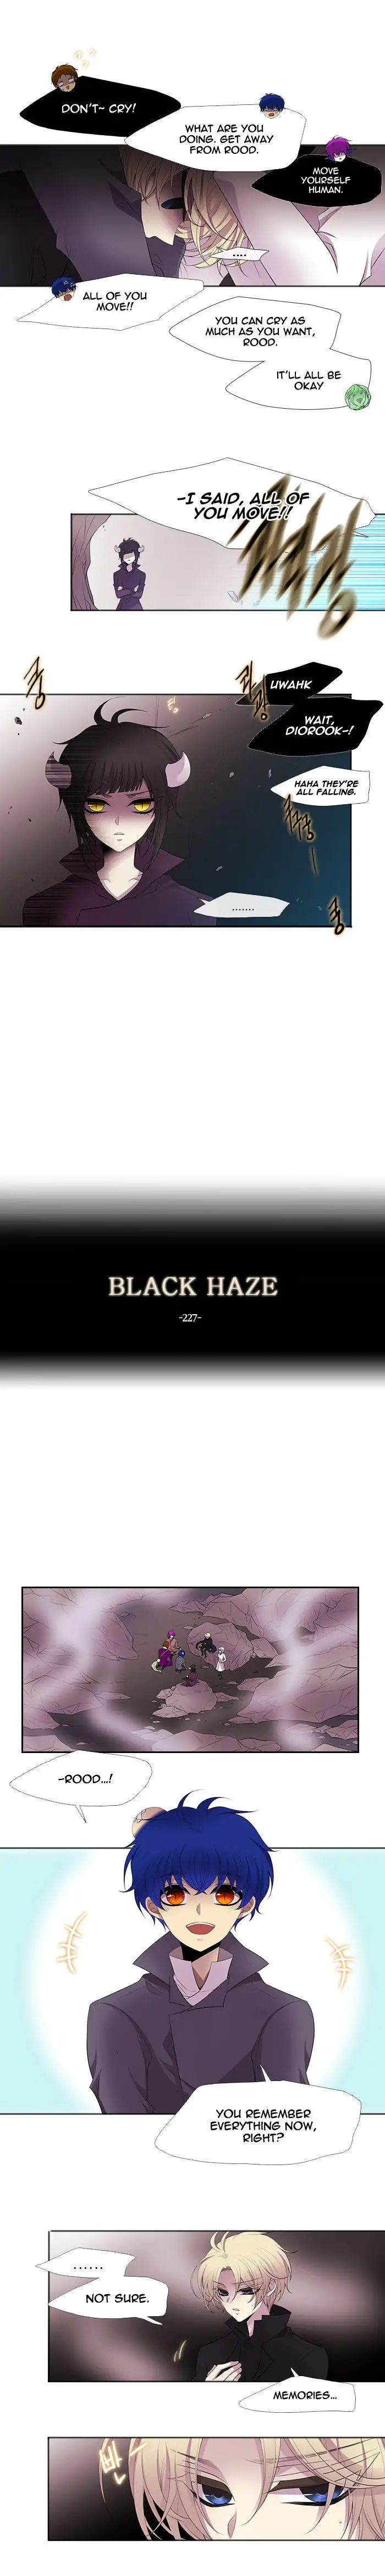 Black Haze - Chapter 227 Page 5